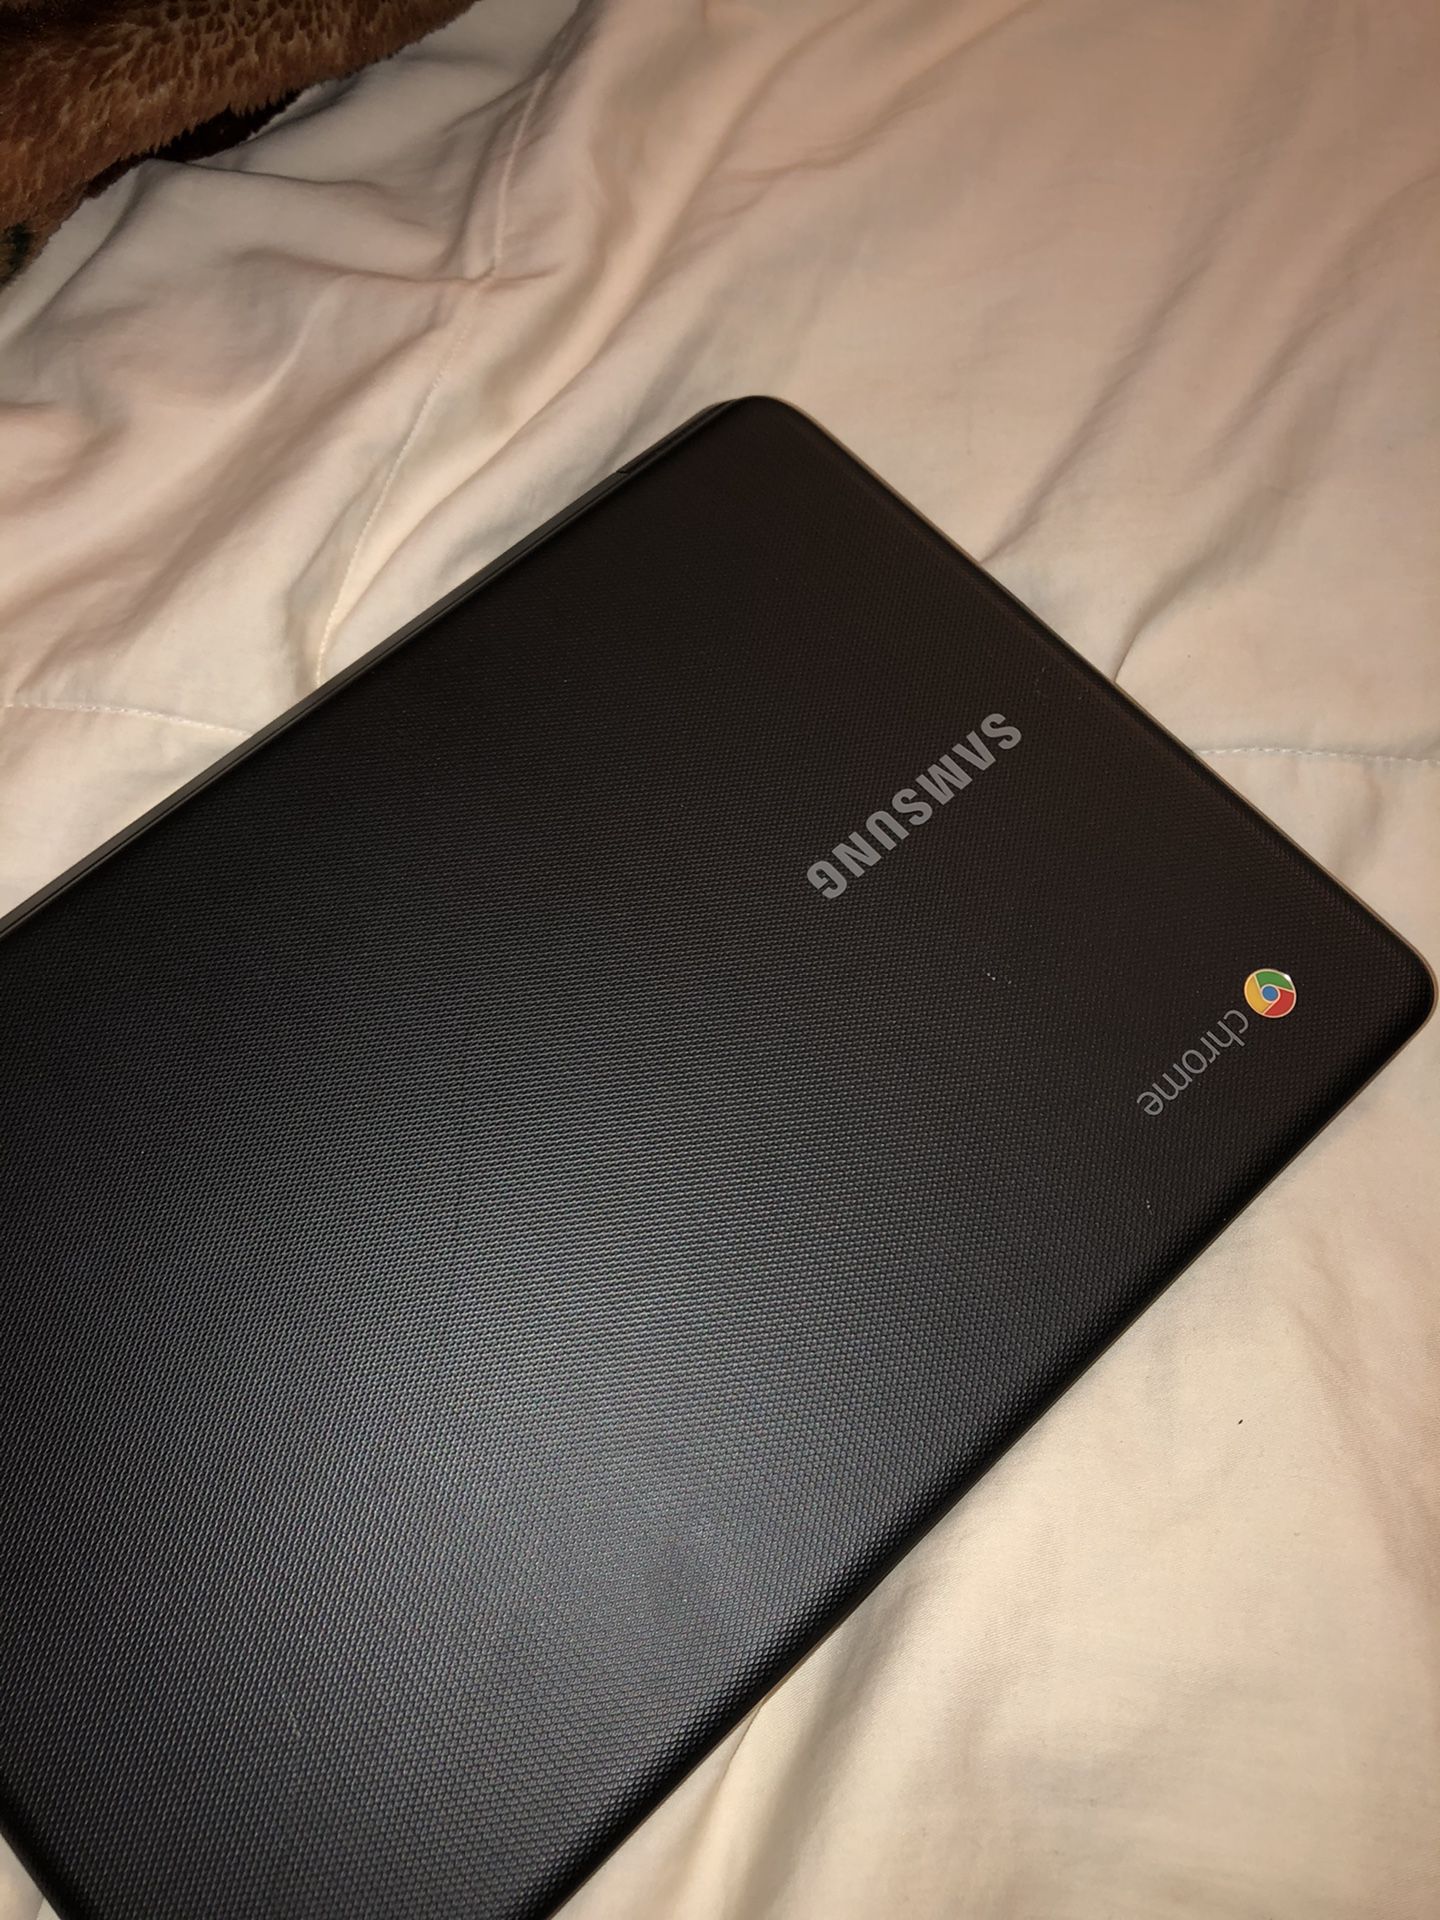 Chrome Samsung book laptop